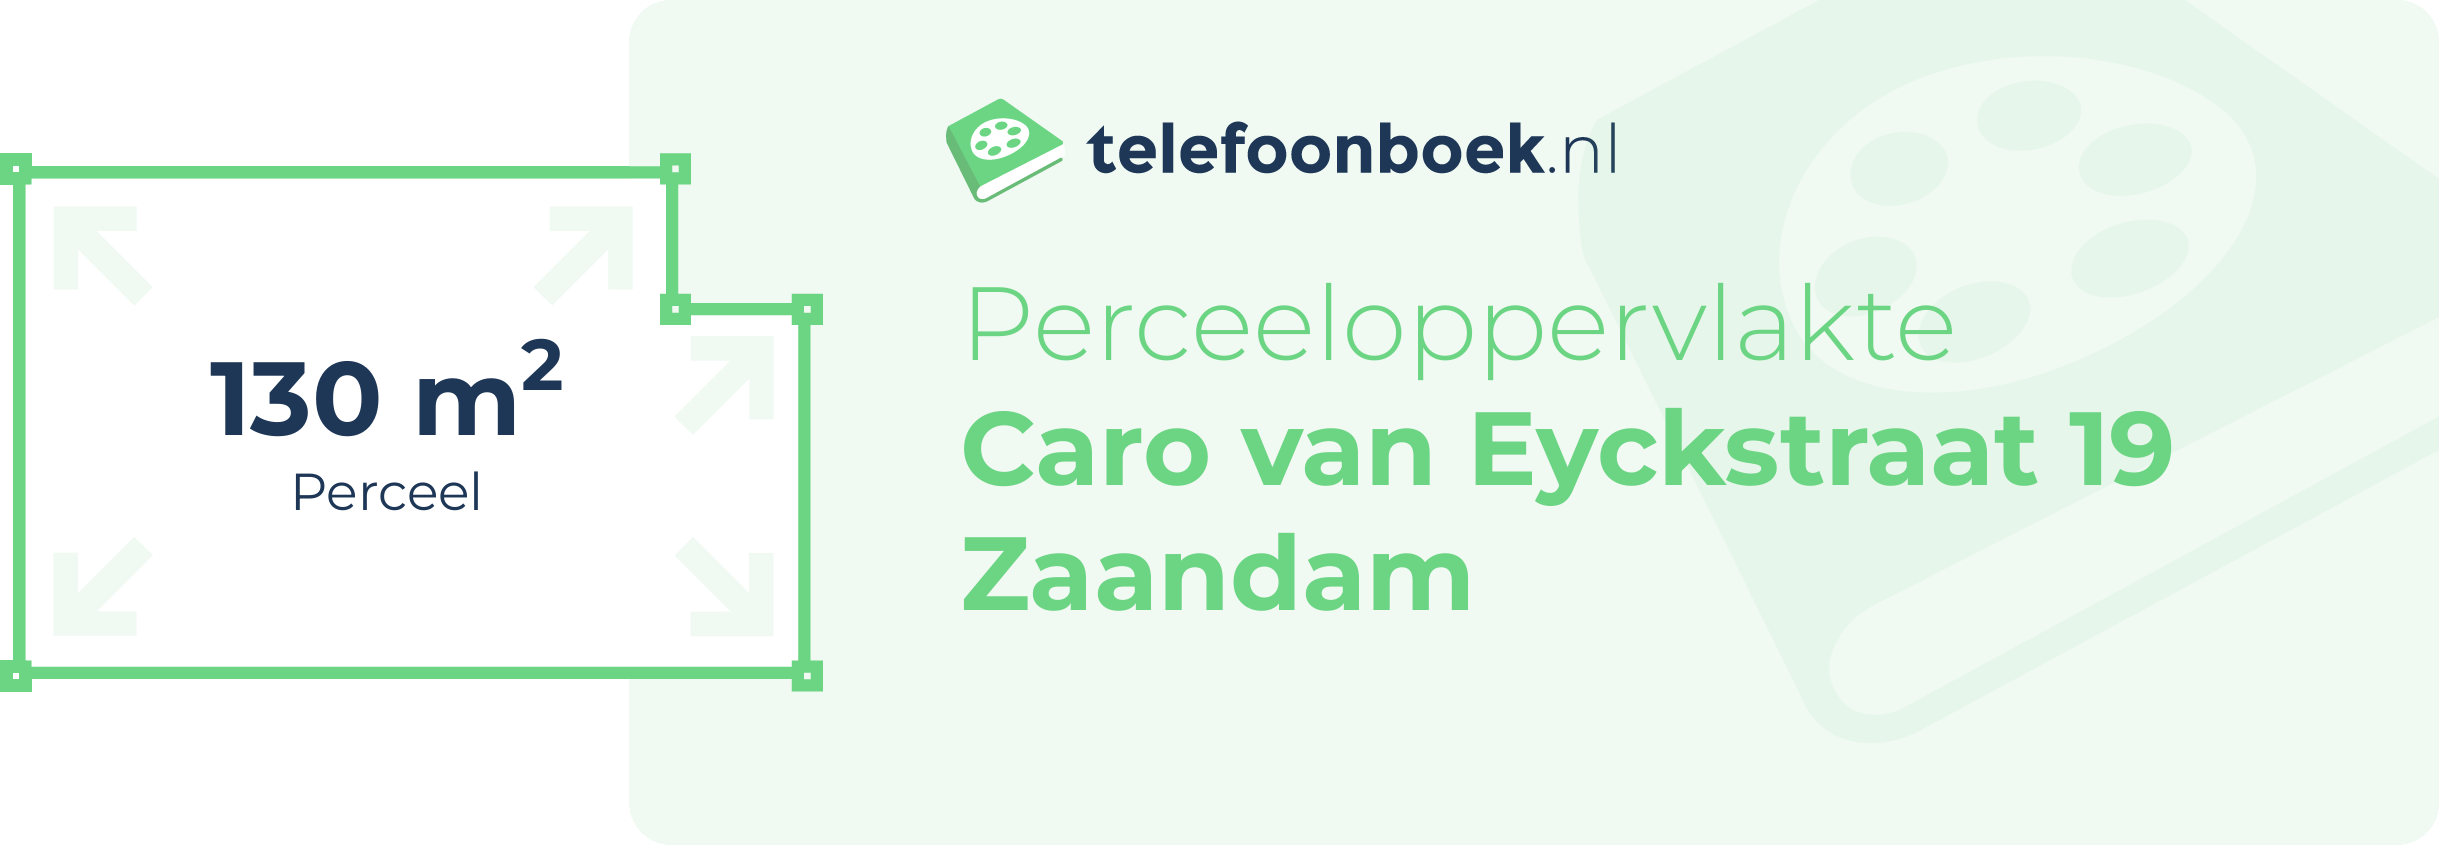 Perceeloppervlakte Caro Van Eyckstraat 19 Zaandam